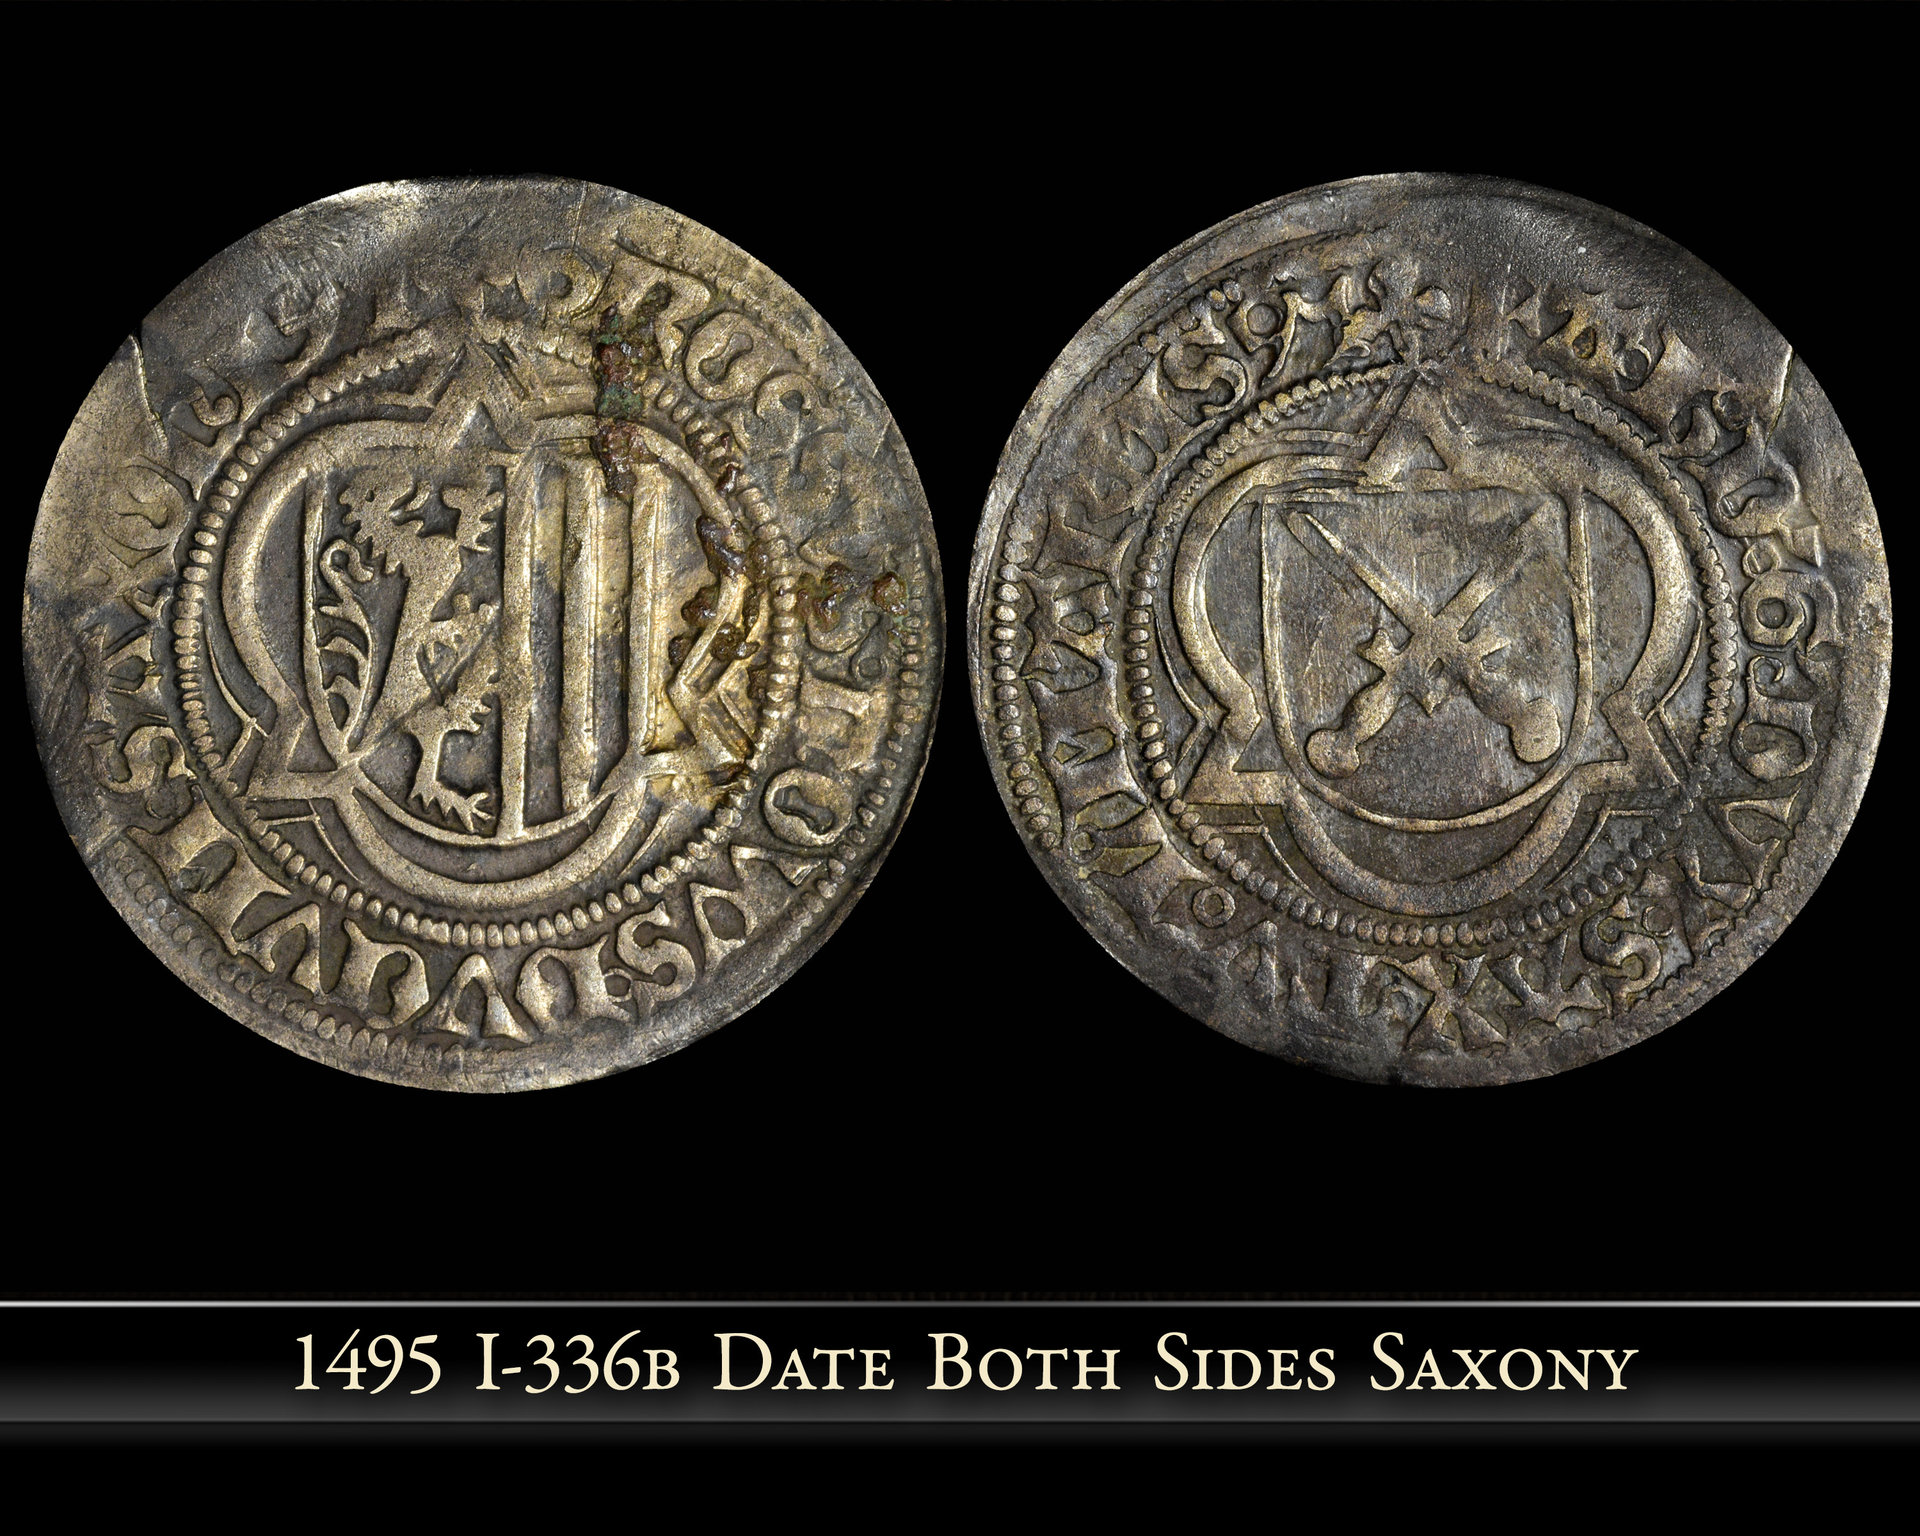 1495 - I - 336 Saxony Date on both sides copy.jpg